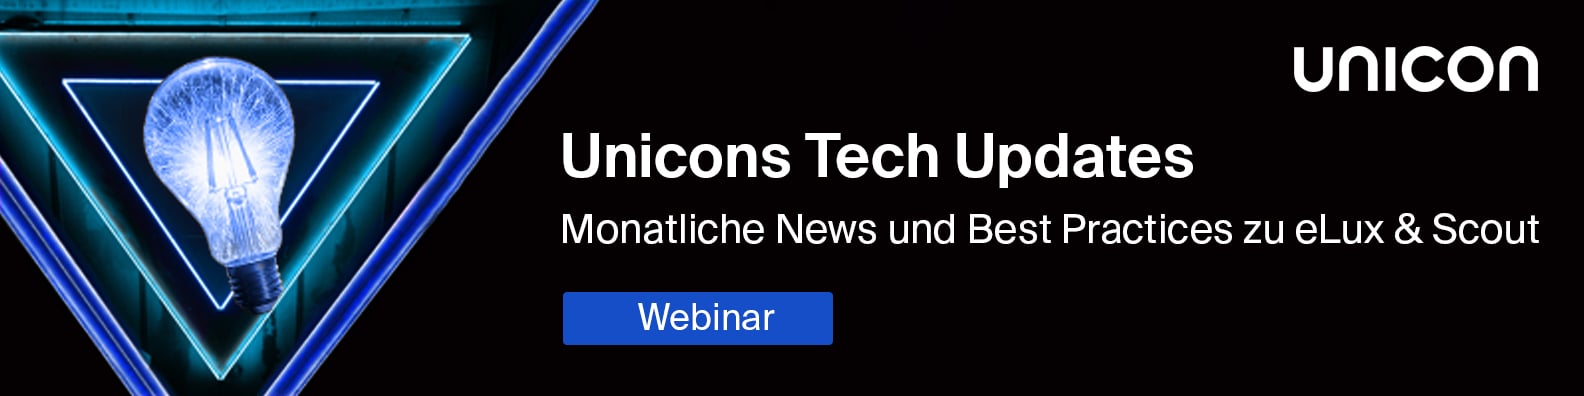 Unicon_Visuals_Tech-Update_LP-Header_DE (1)